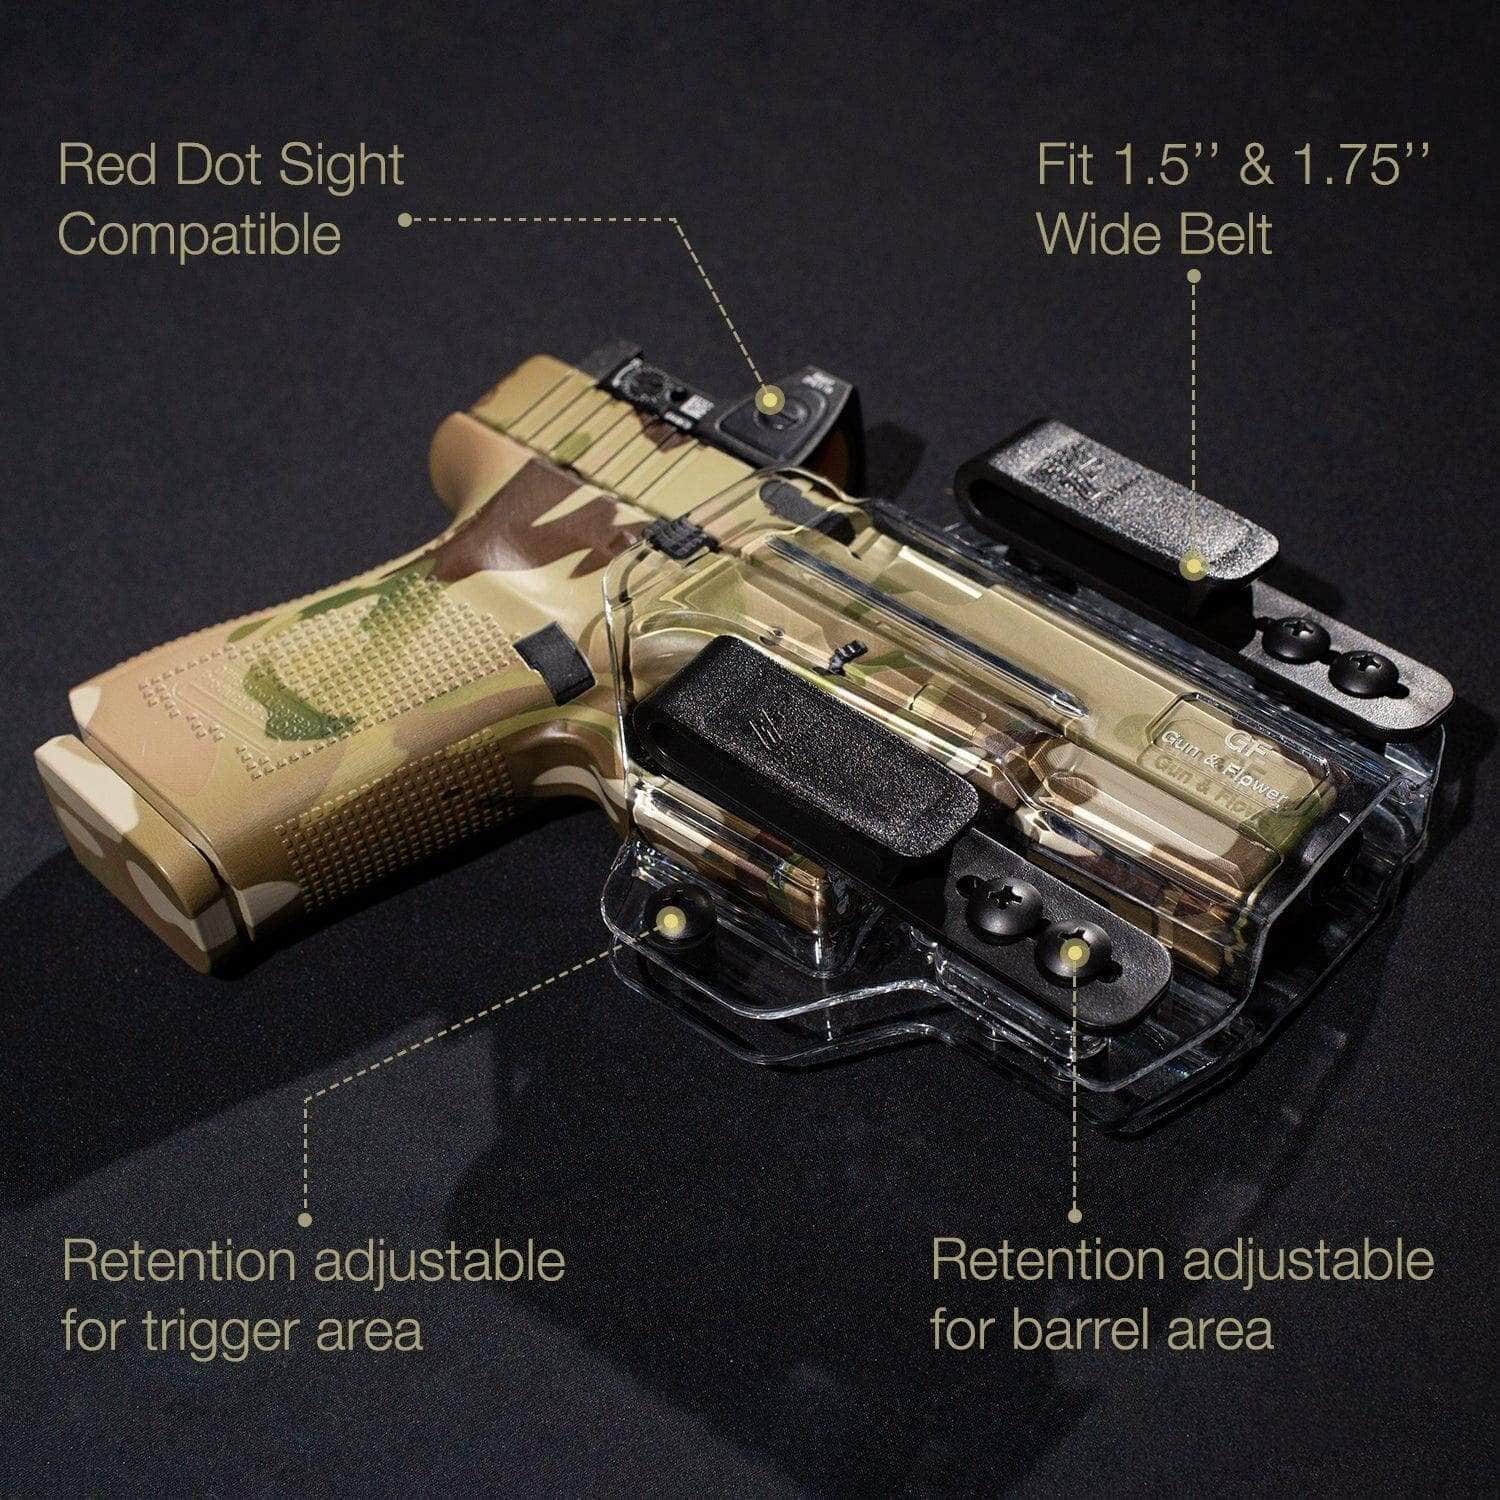 CT3 Level 3 Holster - Glock 19/45 Gen5